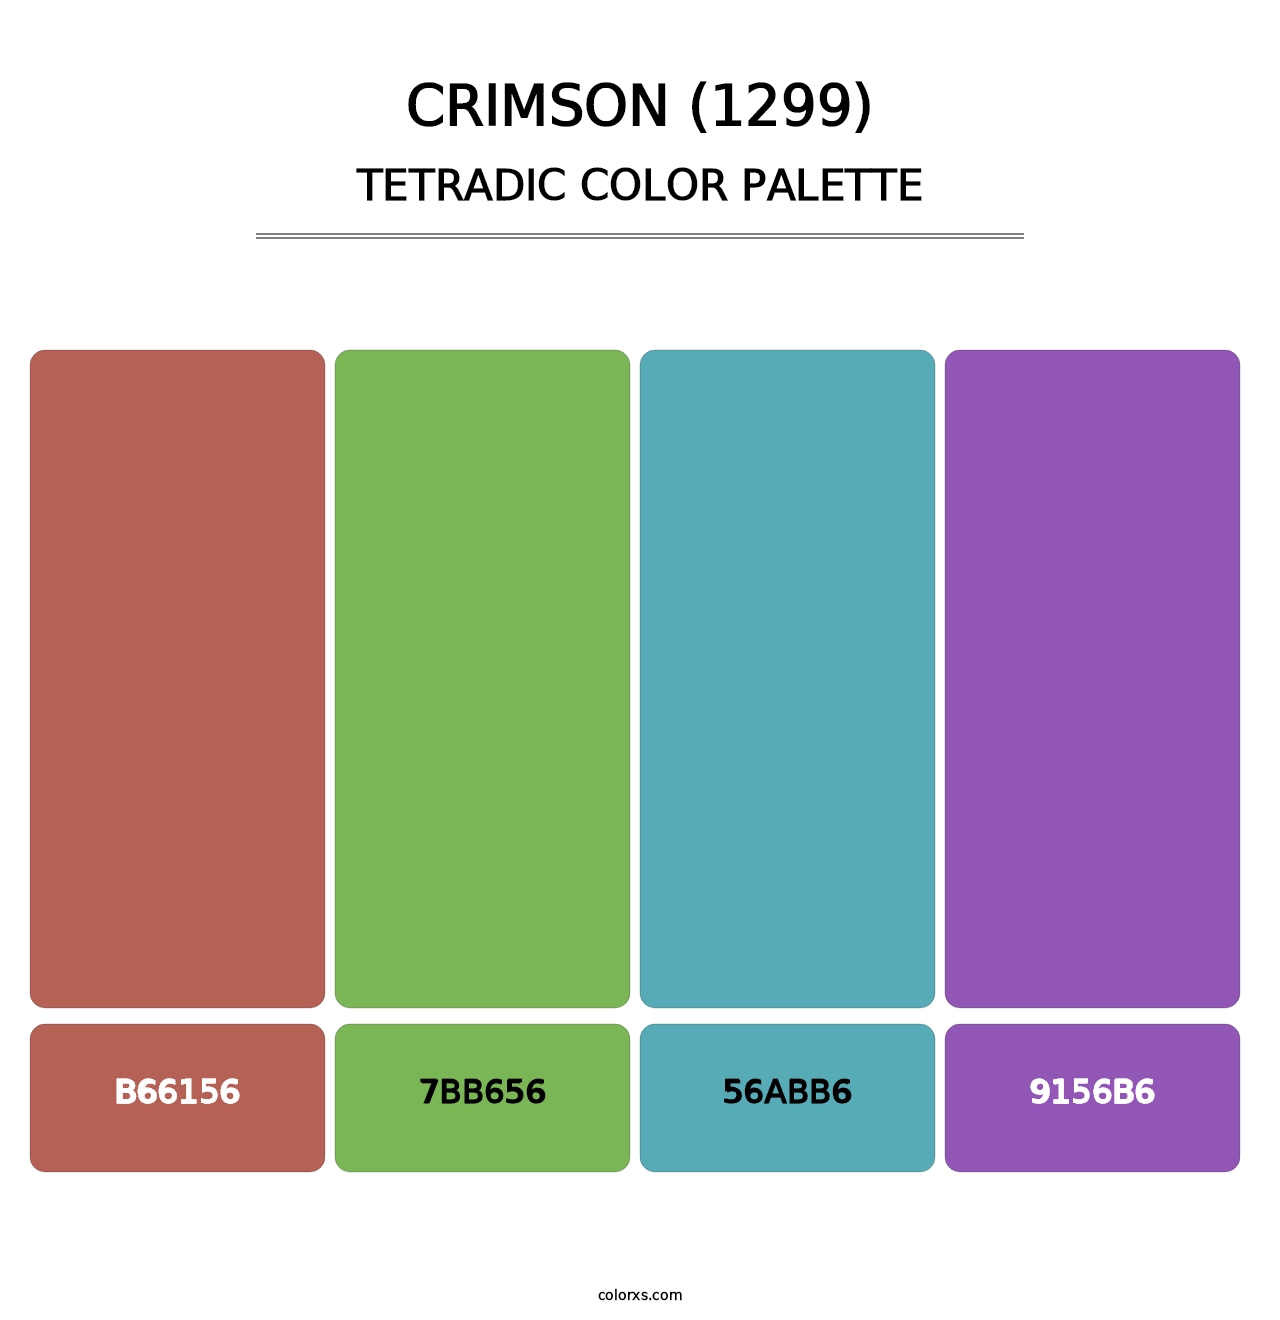 Crimson (1299) - Tetradic Color Palette